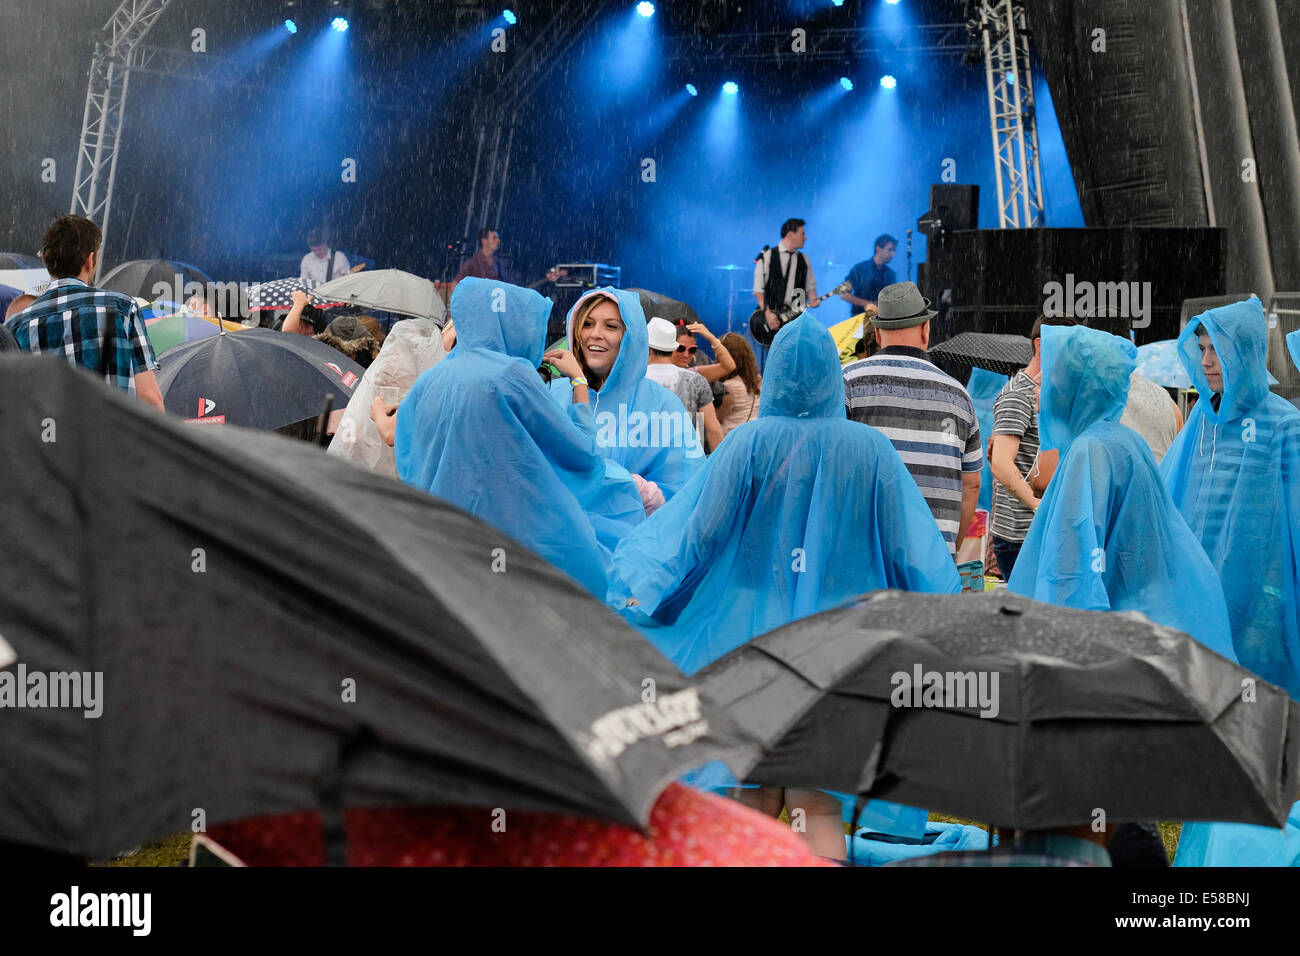 Festivalgoers enjoying the Brentwood Festival despite the bad weather. Stock Photo